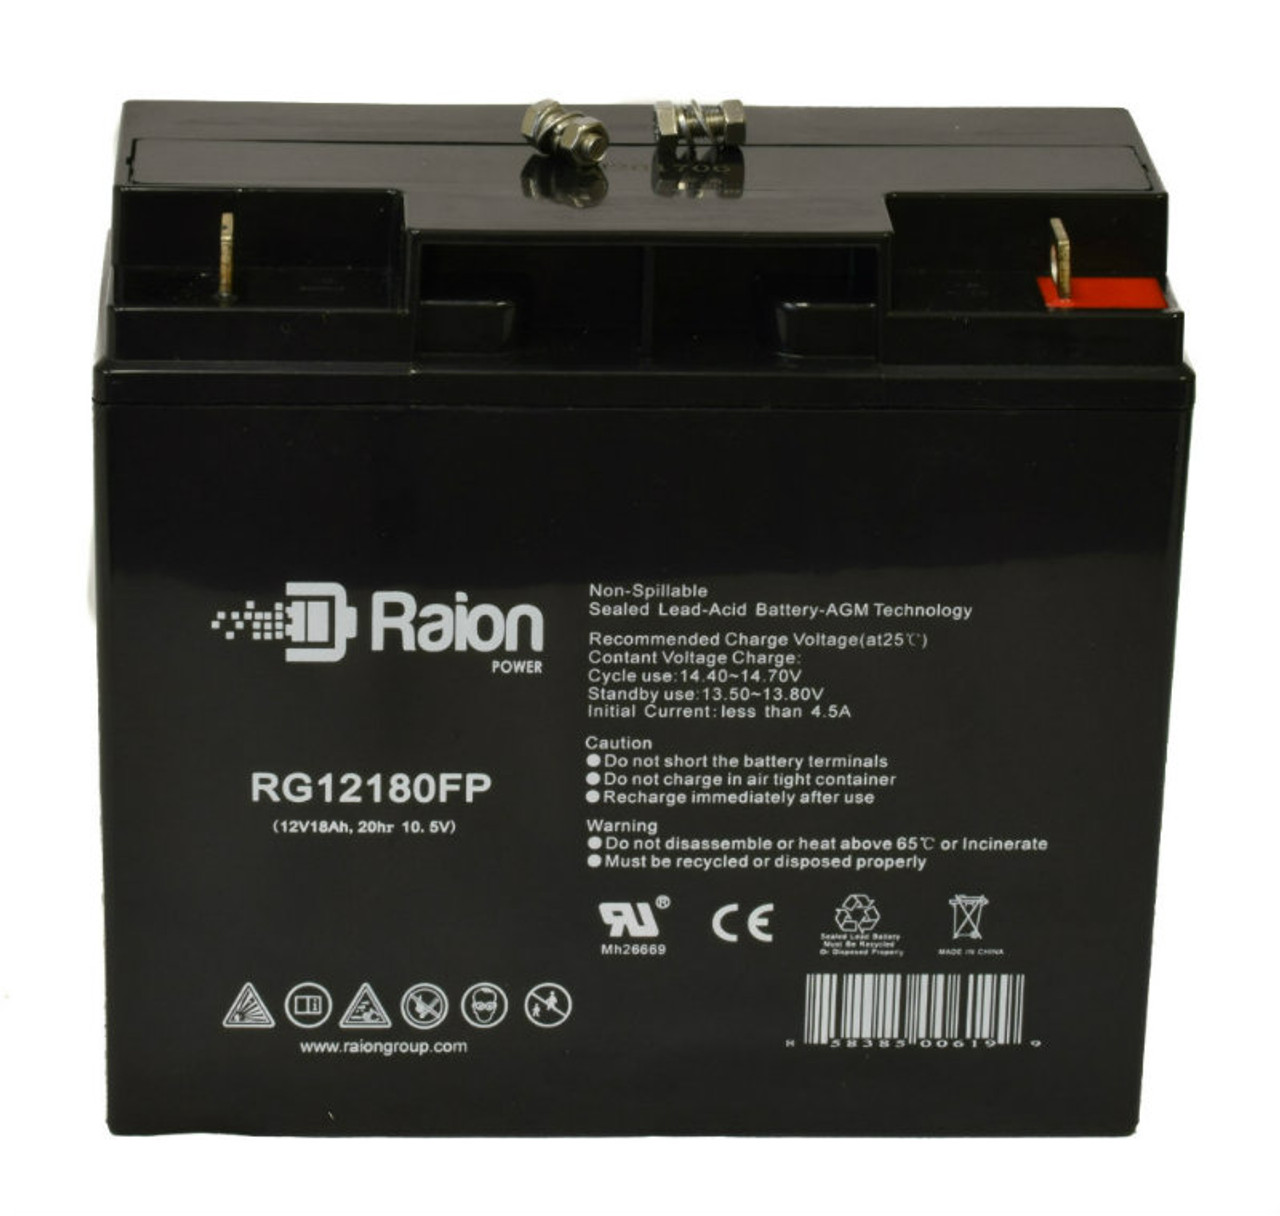 Raion Power RG12180FP 12V 18Ah Lead Acid Battery for Henglypower HL12200